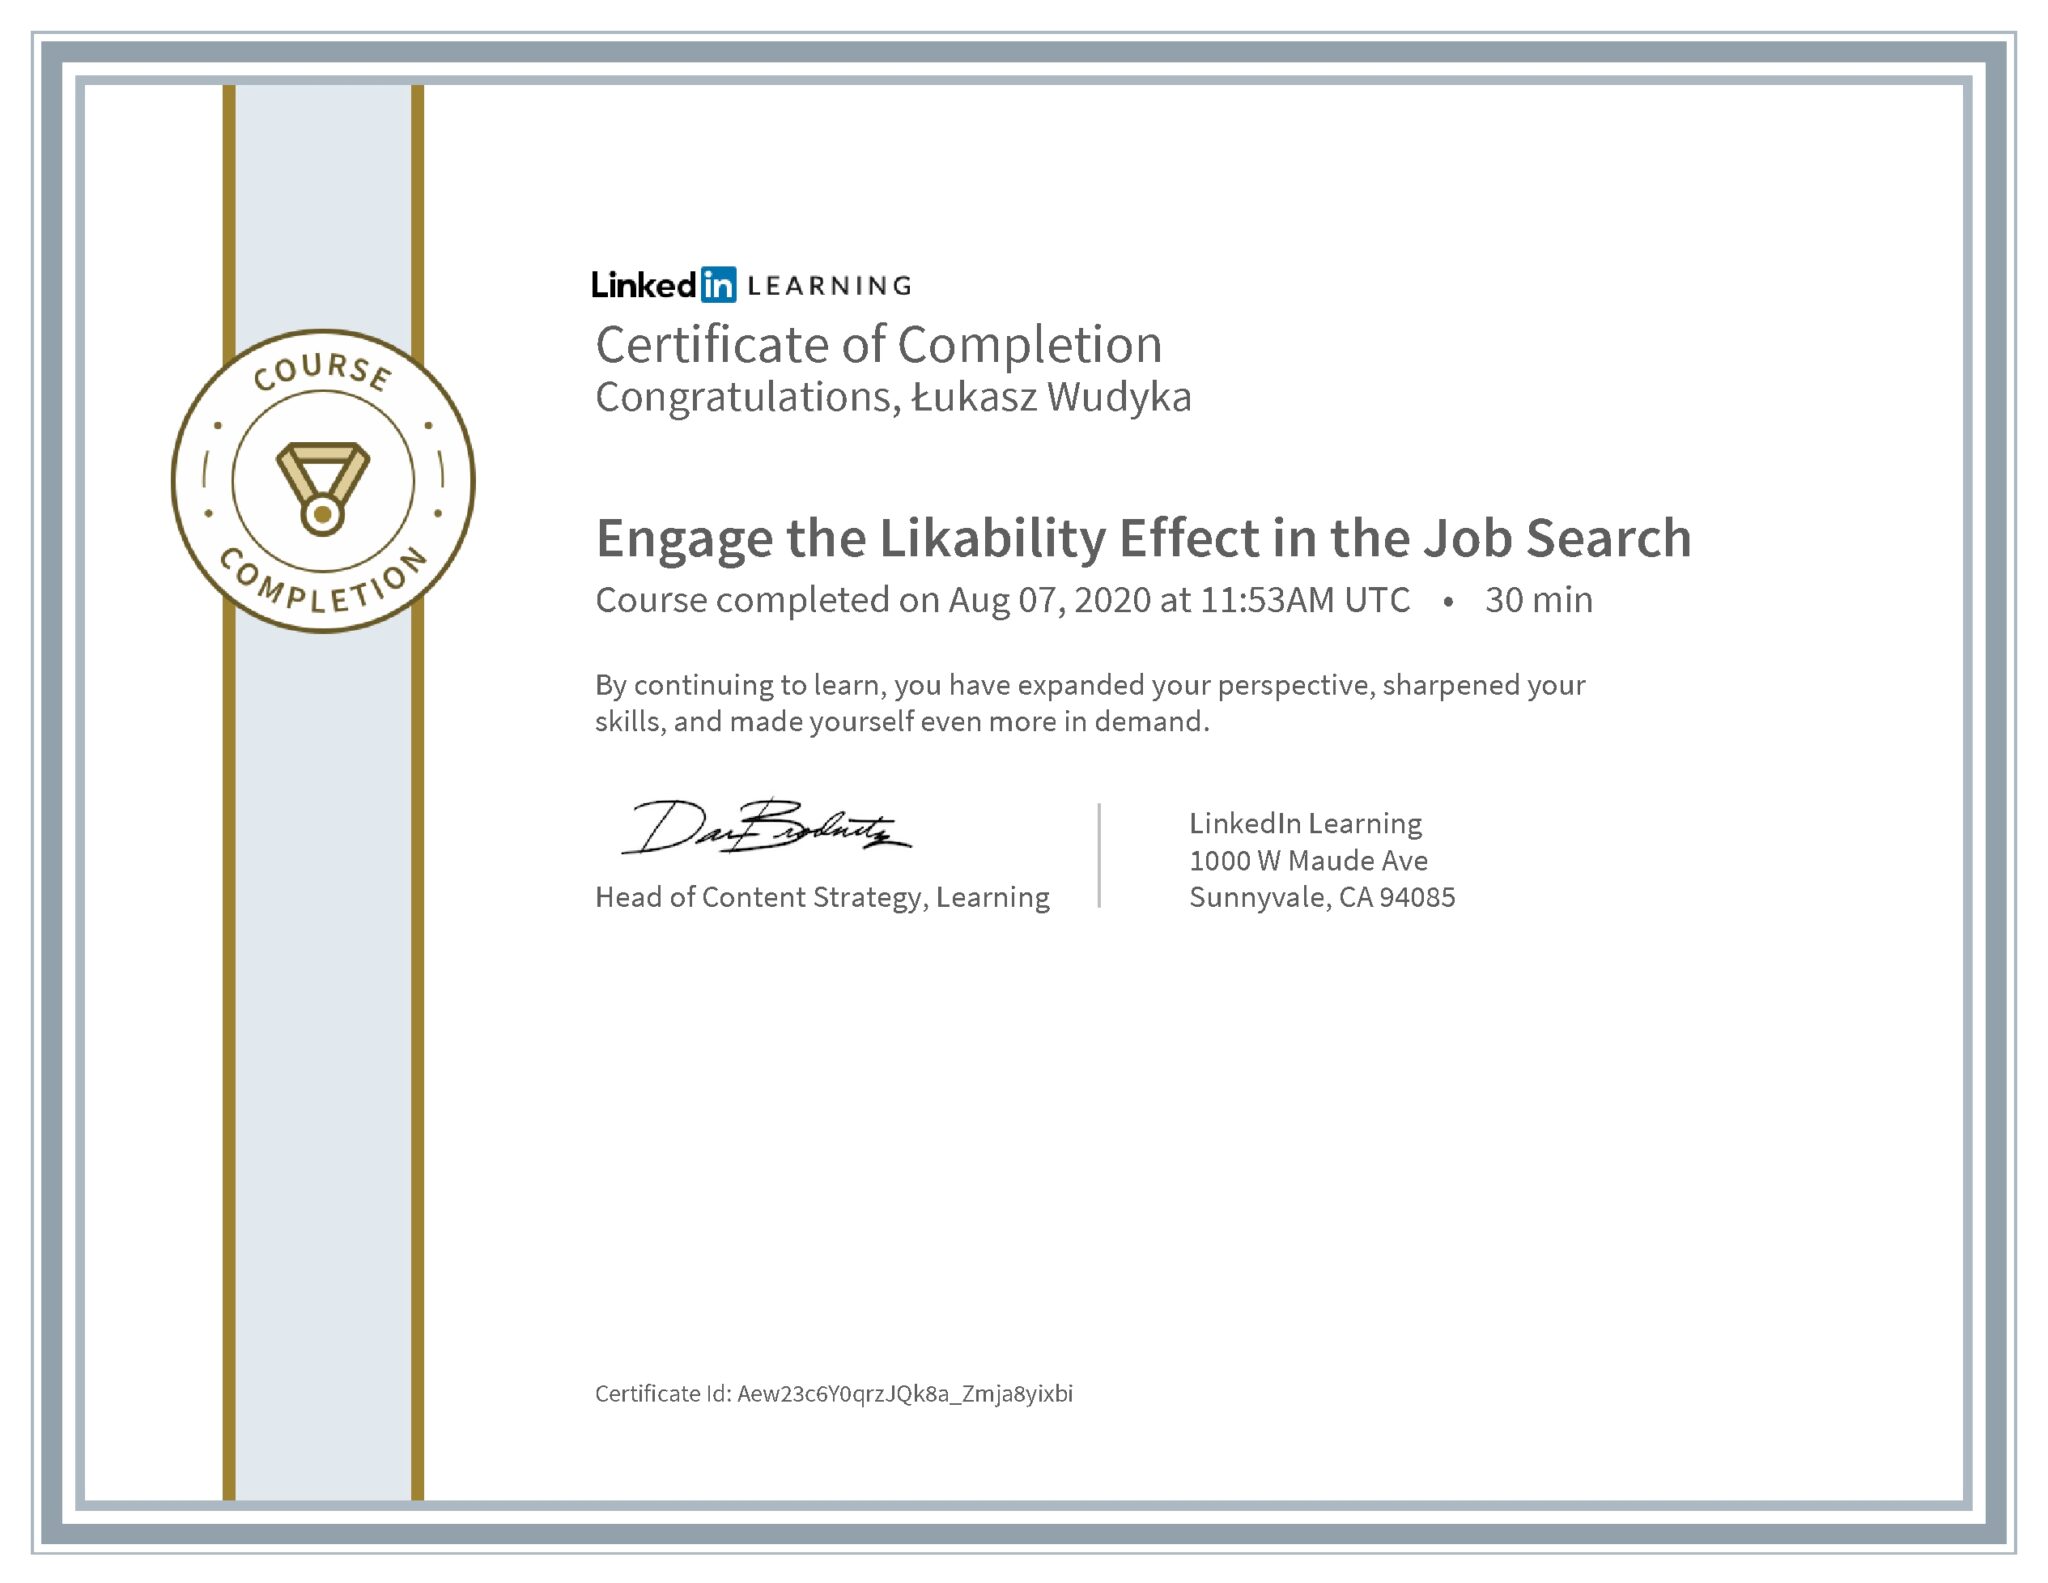 Łukasz Wudyka certyfikat LinkedIn Engage the Likability Effect in the Job Search